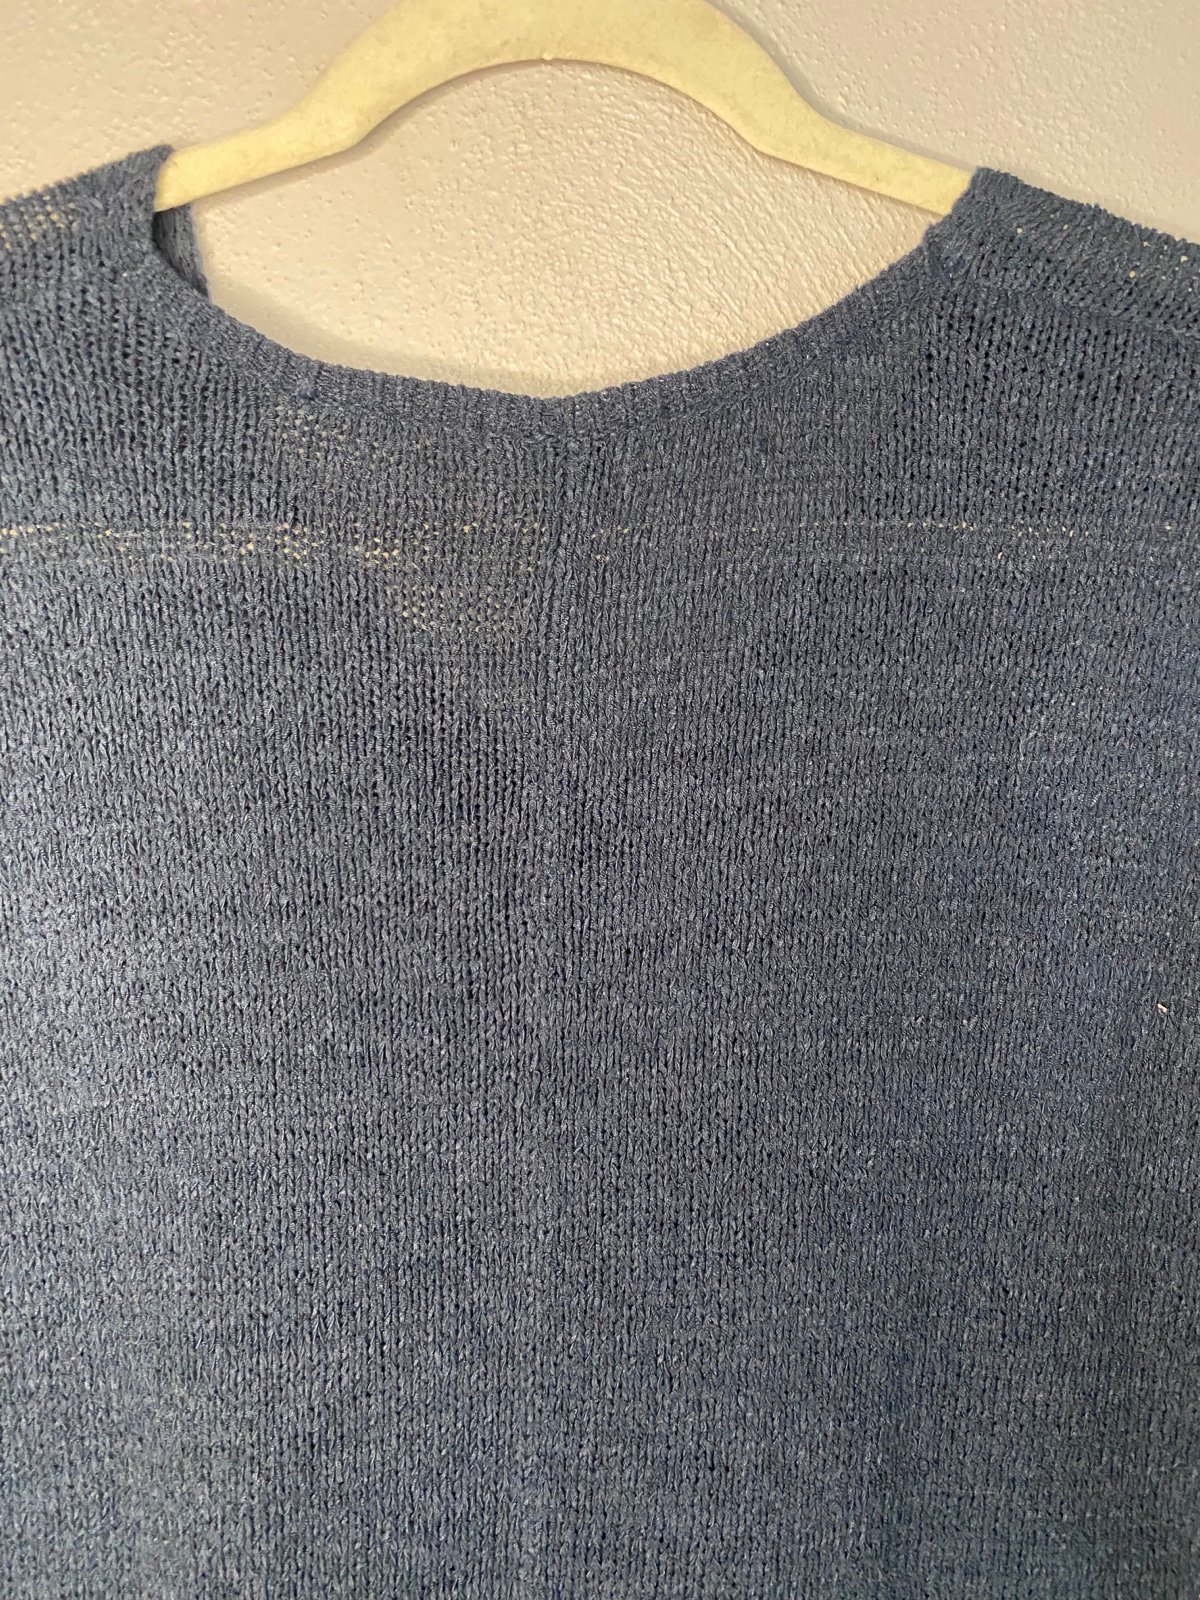 Simple Kiabi Women’s Navy Blue 3/4 Sleeves V Neck Knit Sweater Size S P6yWwbTaS no tax